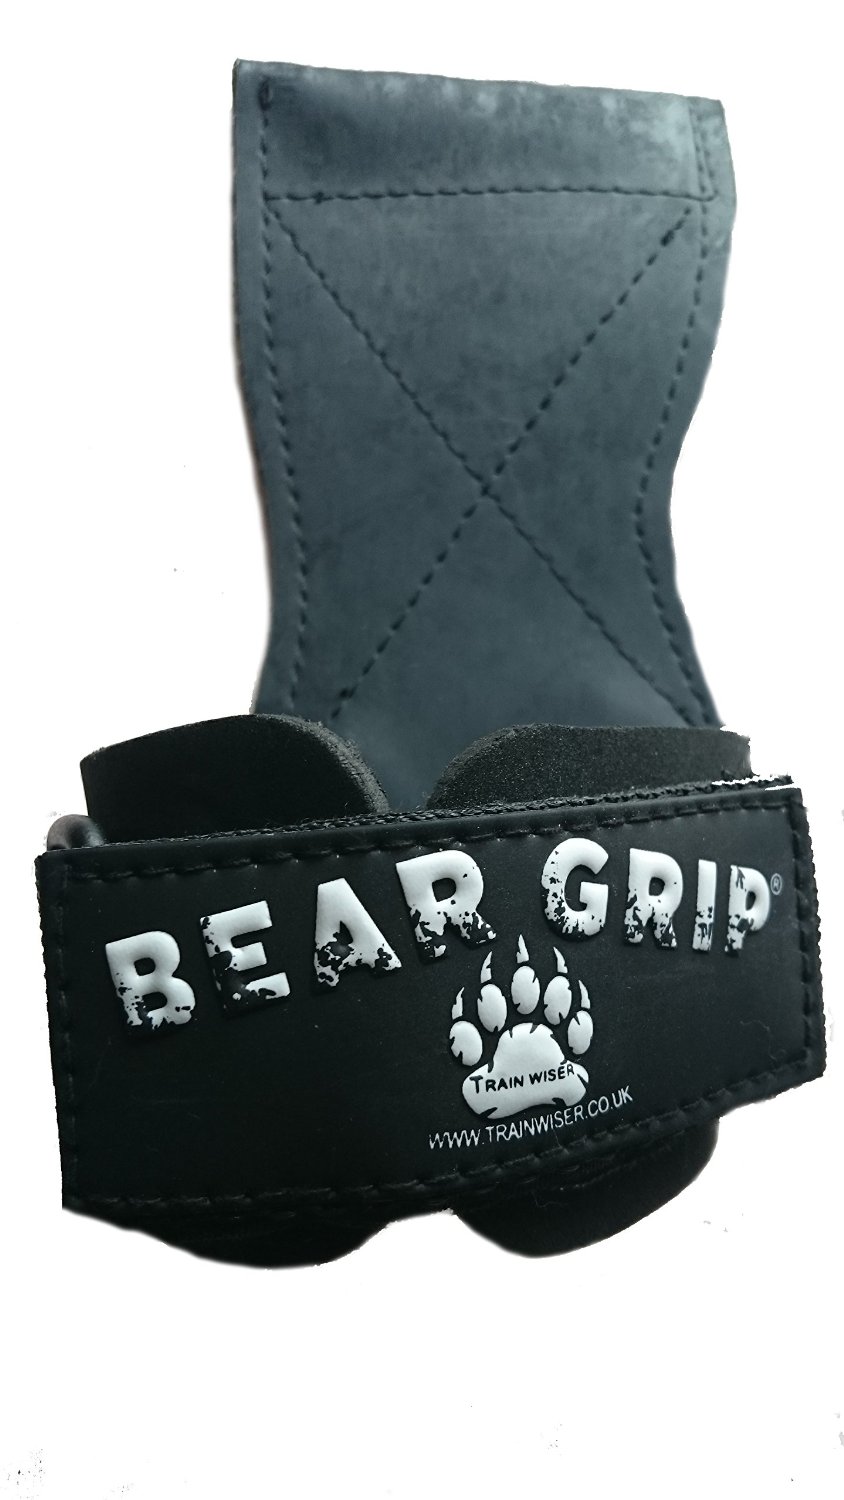 BEAR GRIP Multi Grip Straps/Hooks Premium Heavy duty weight lifting straps/gloves